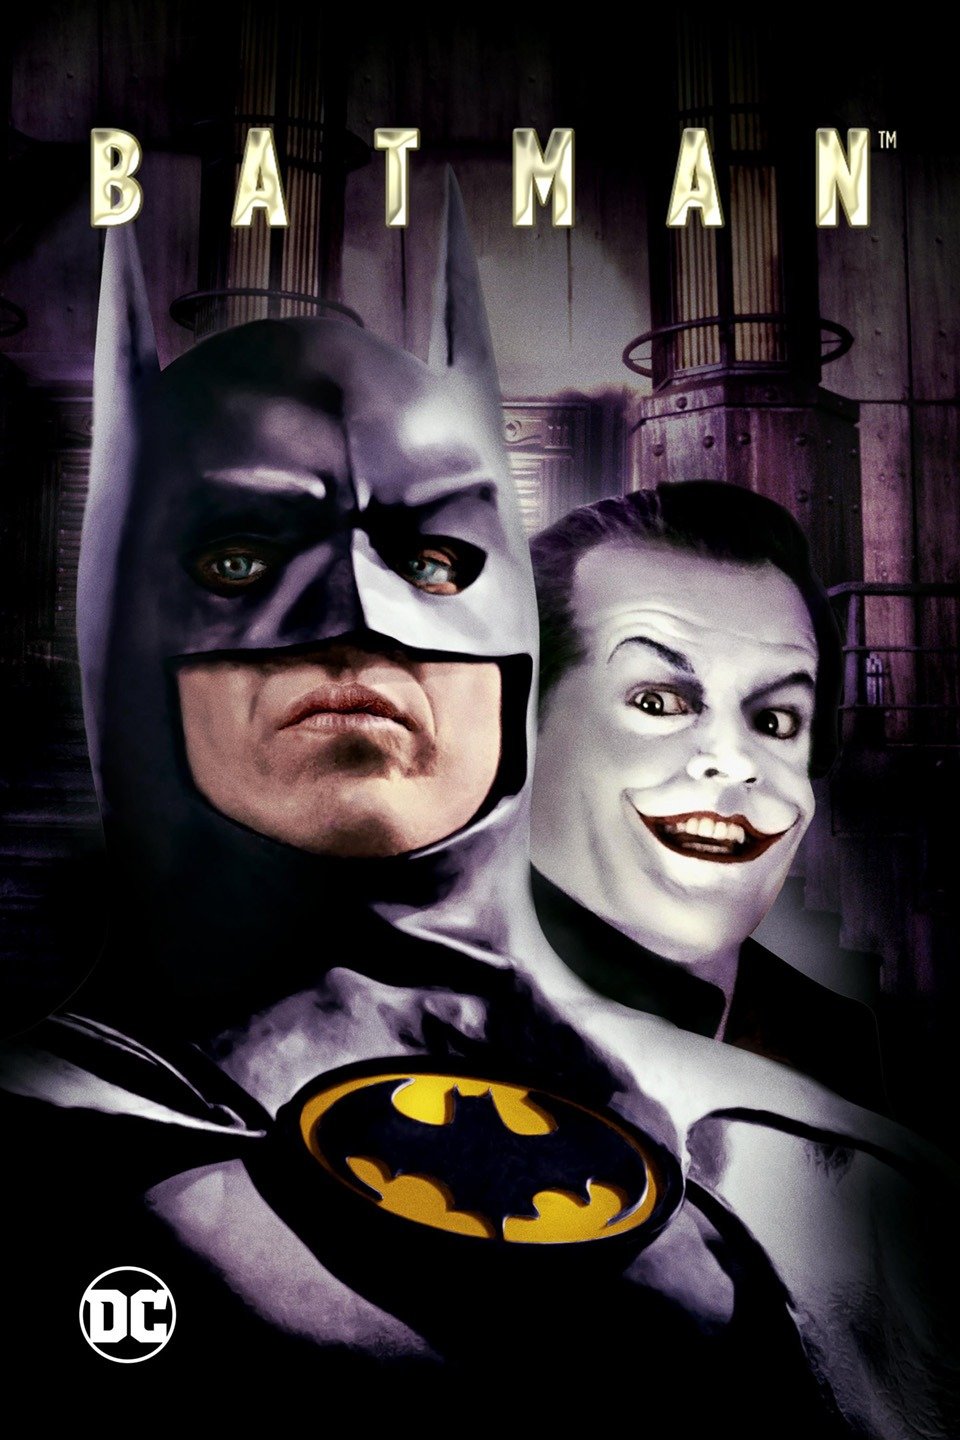 [MINI-HD] Batman (1989) แบทแมน ภาค 1 [1080p] [พากย์ไทย 5.1 + เสียงอังกฤษ DTS] [บรรยายไทย + อังกฤษ] [เสียงไทย + ซับไทย] [OPENLOAD]